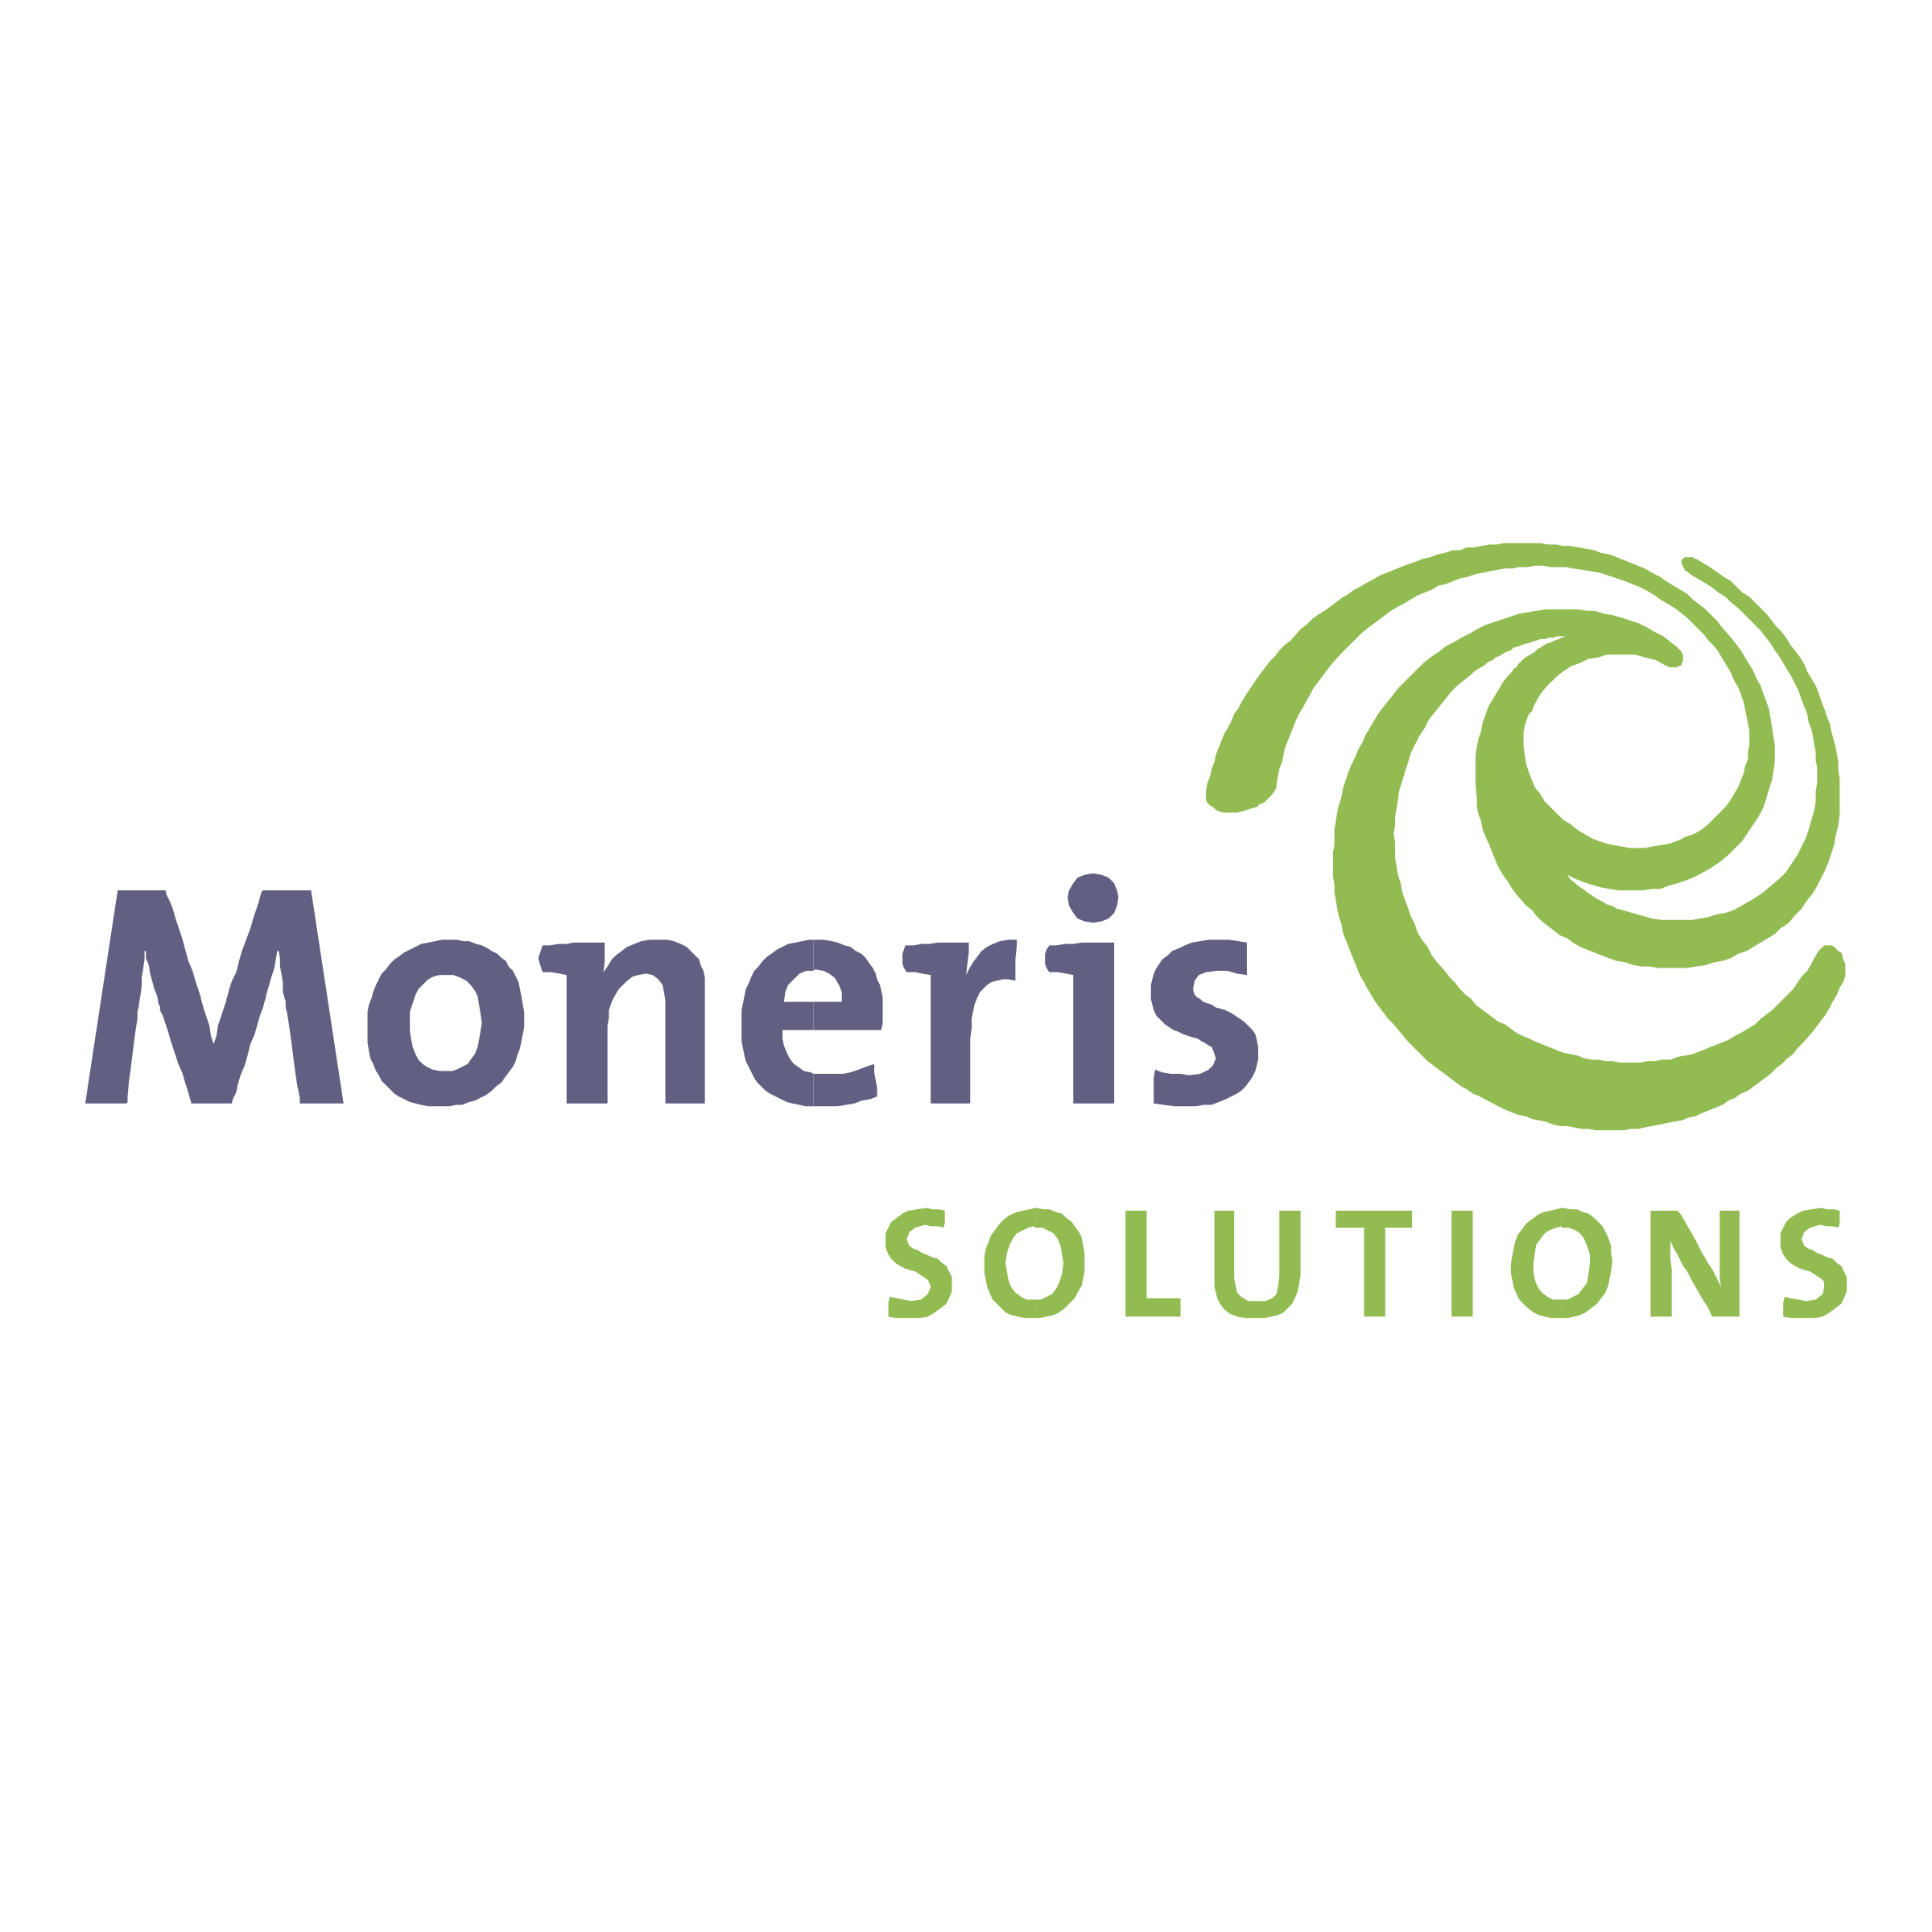 Moneris Logo - Moneris Solutions Logo PNG Transparent & SVG Vector